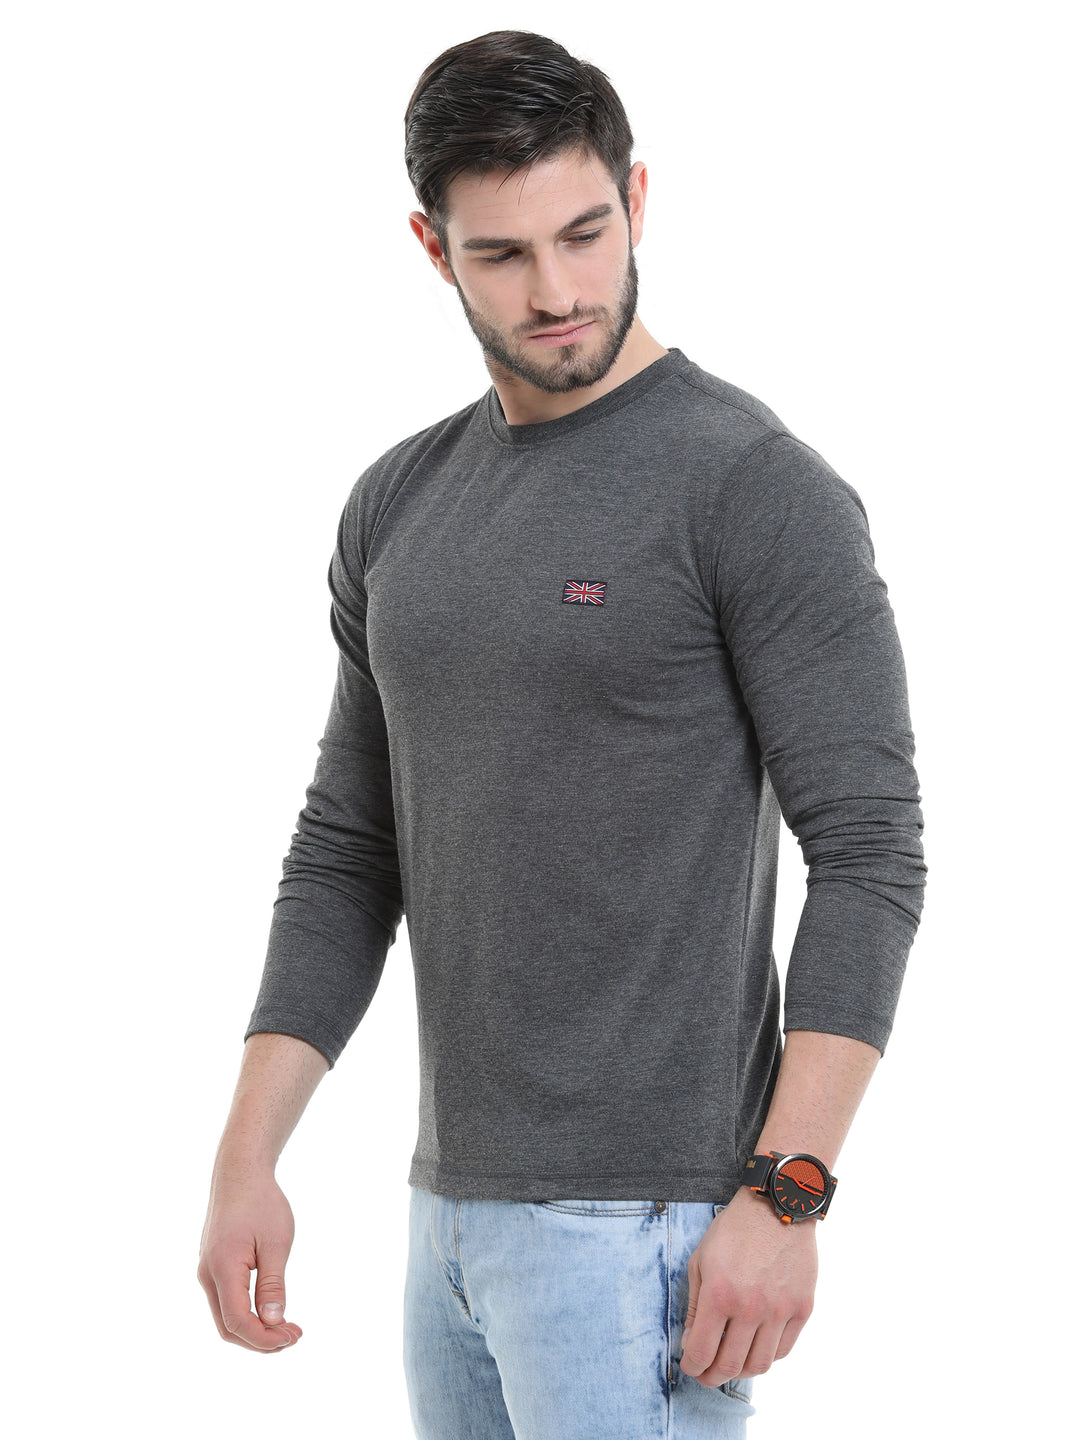 BU 09 Long Sleeve T-Shirt (Charcoal Melange)